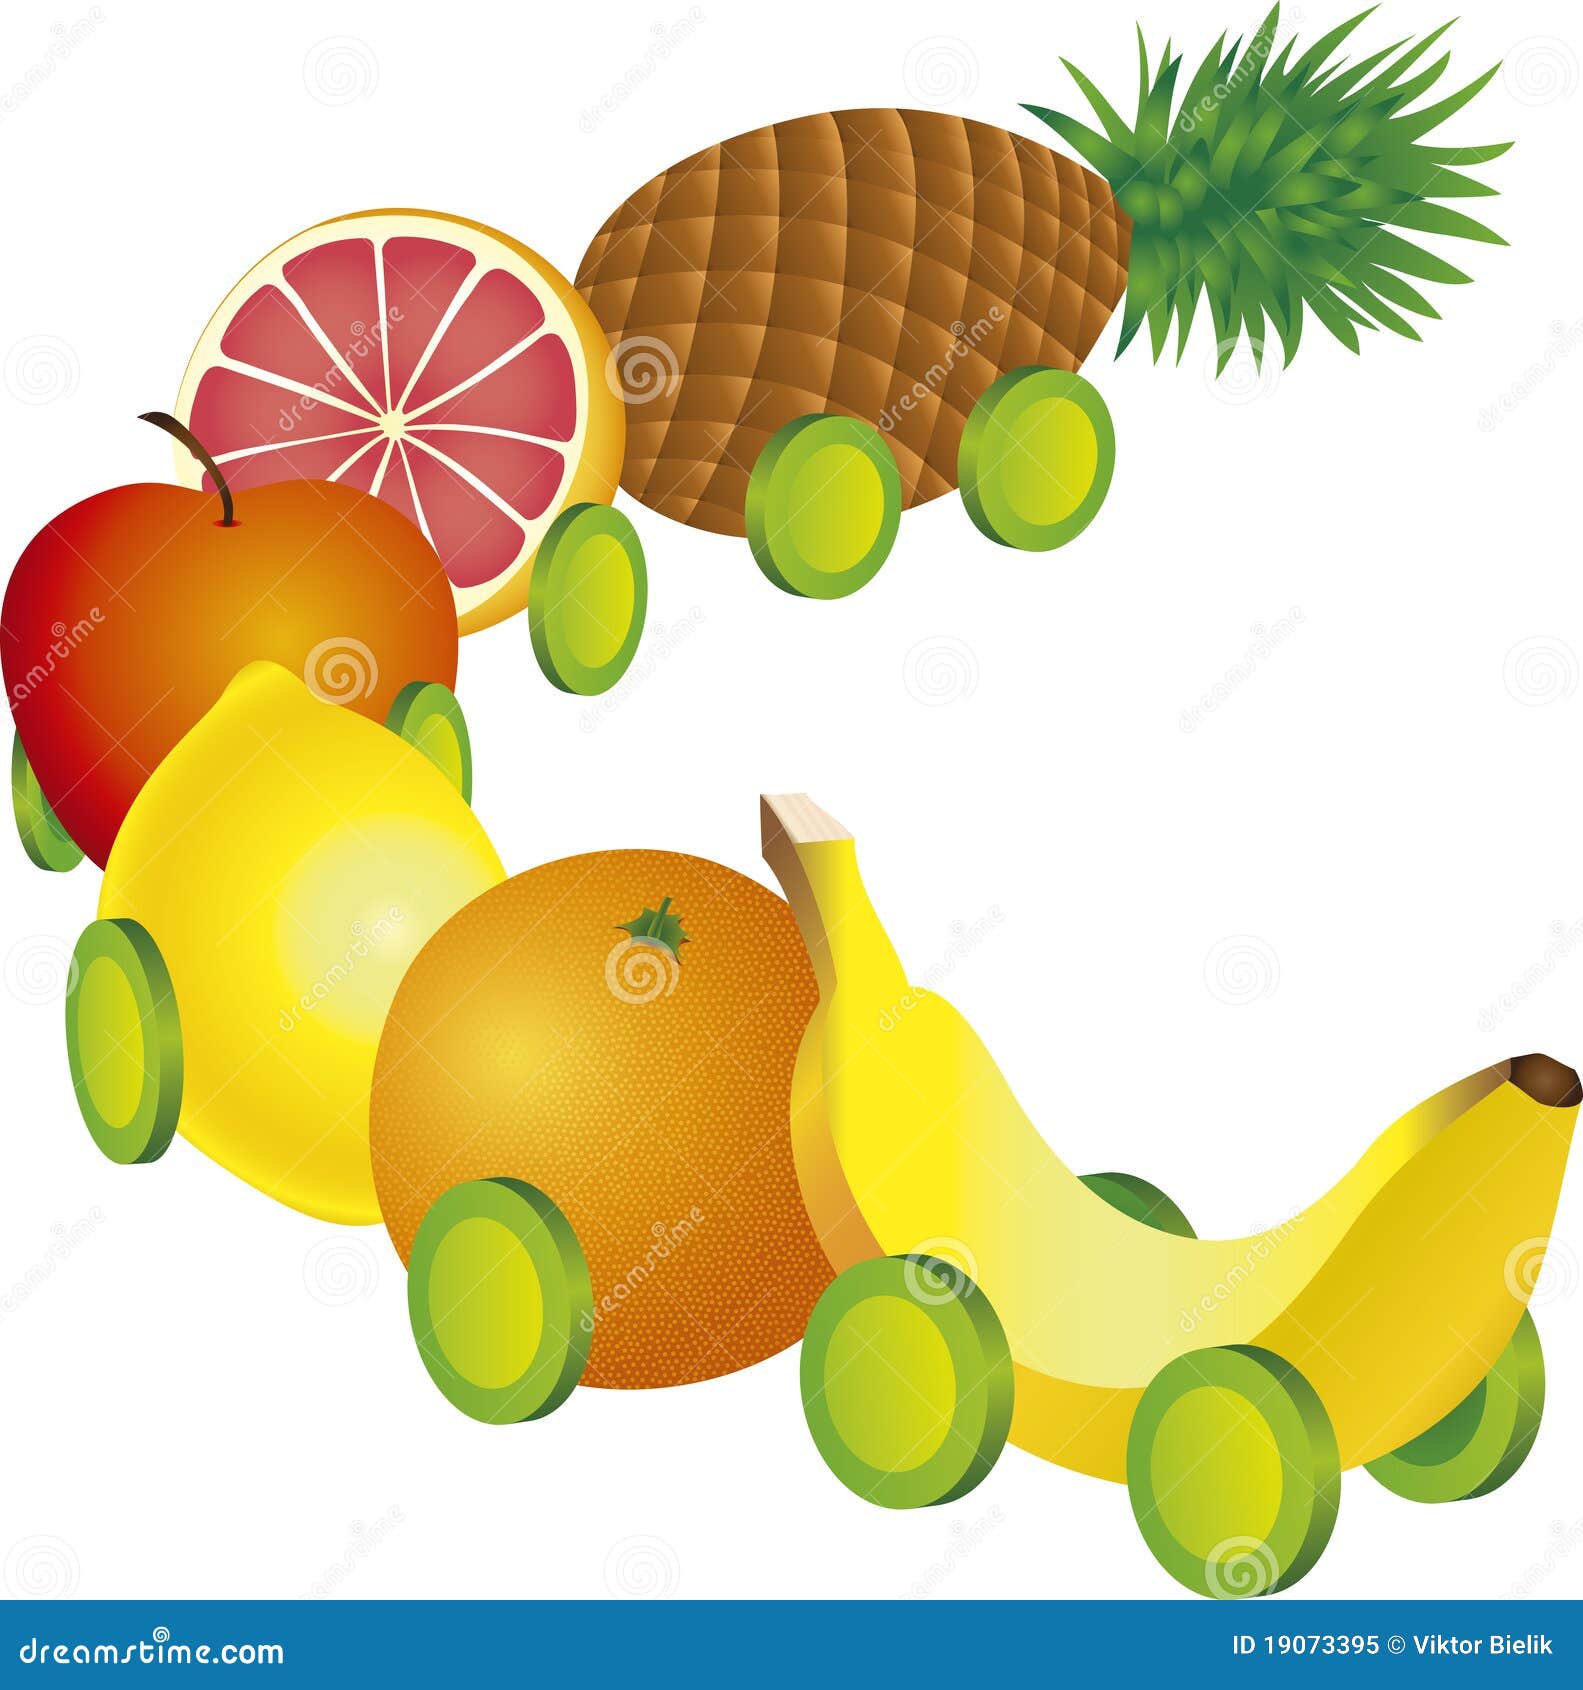 Fruits train stock vector. Illustration of fruit, grapefruit - 19073395